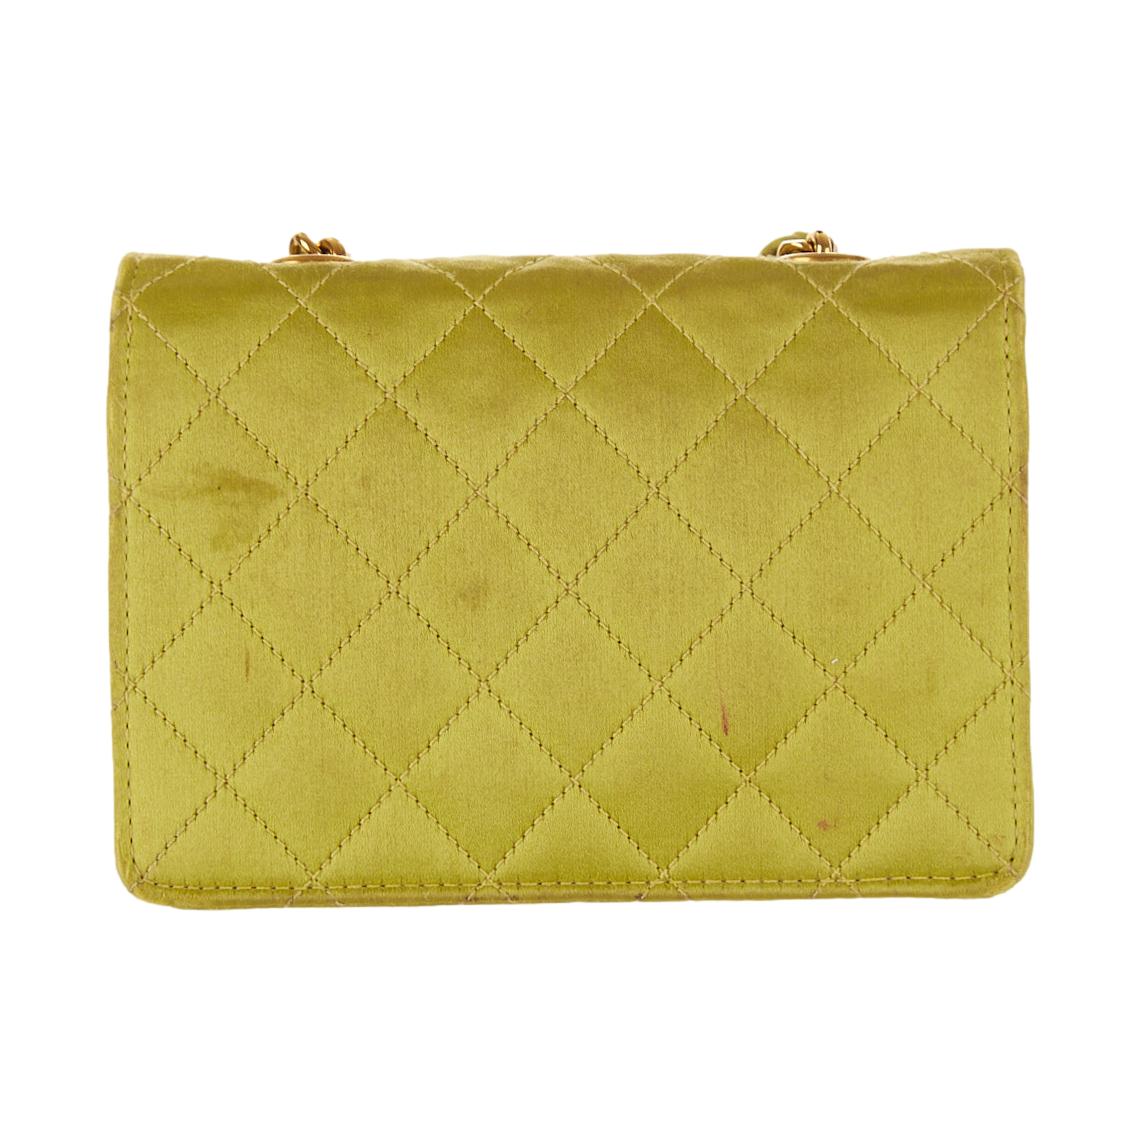 Chanel Green Satin Mini Flap Bag